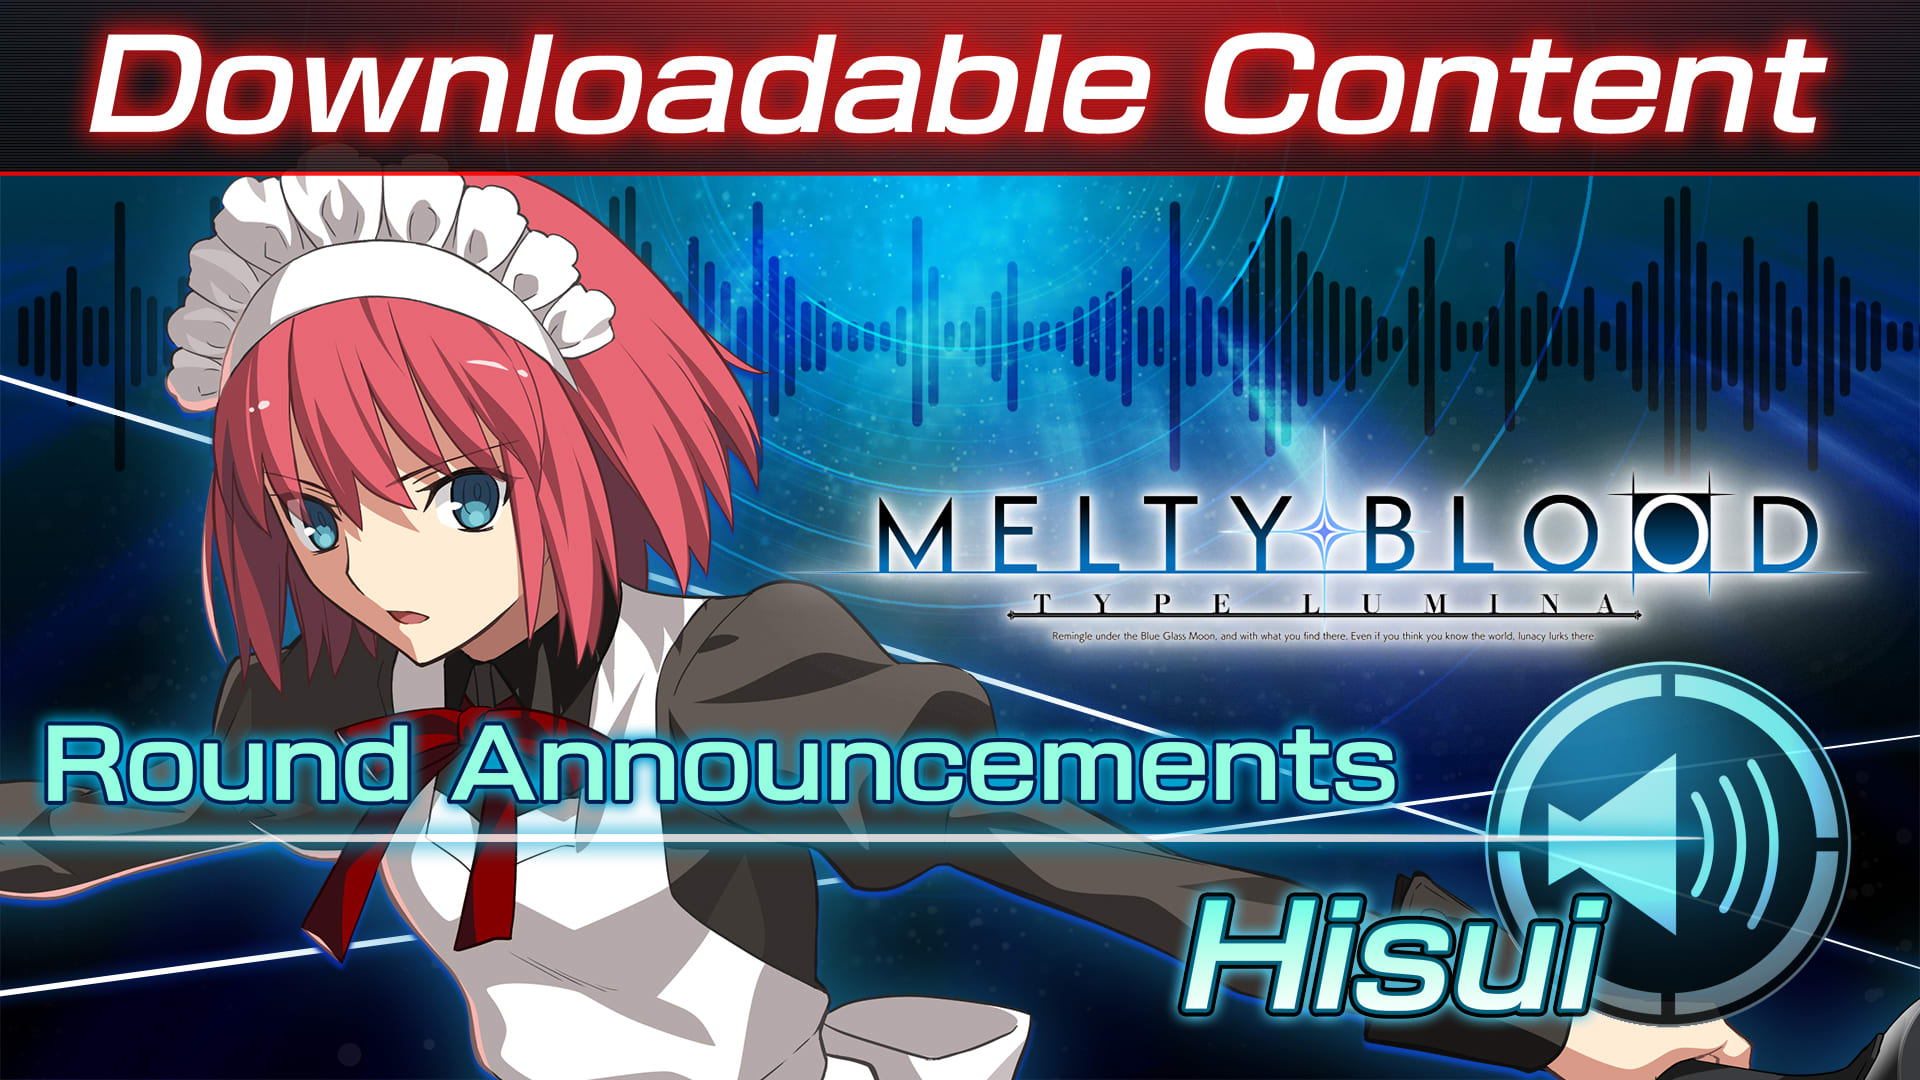 DLC: Hisui Round Announcements